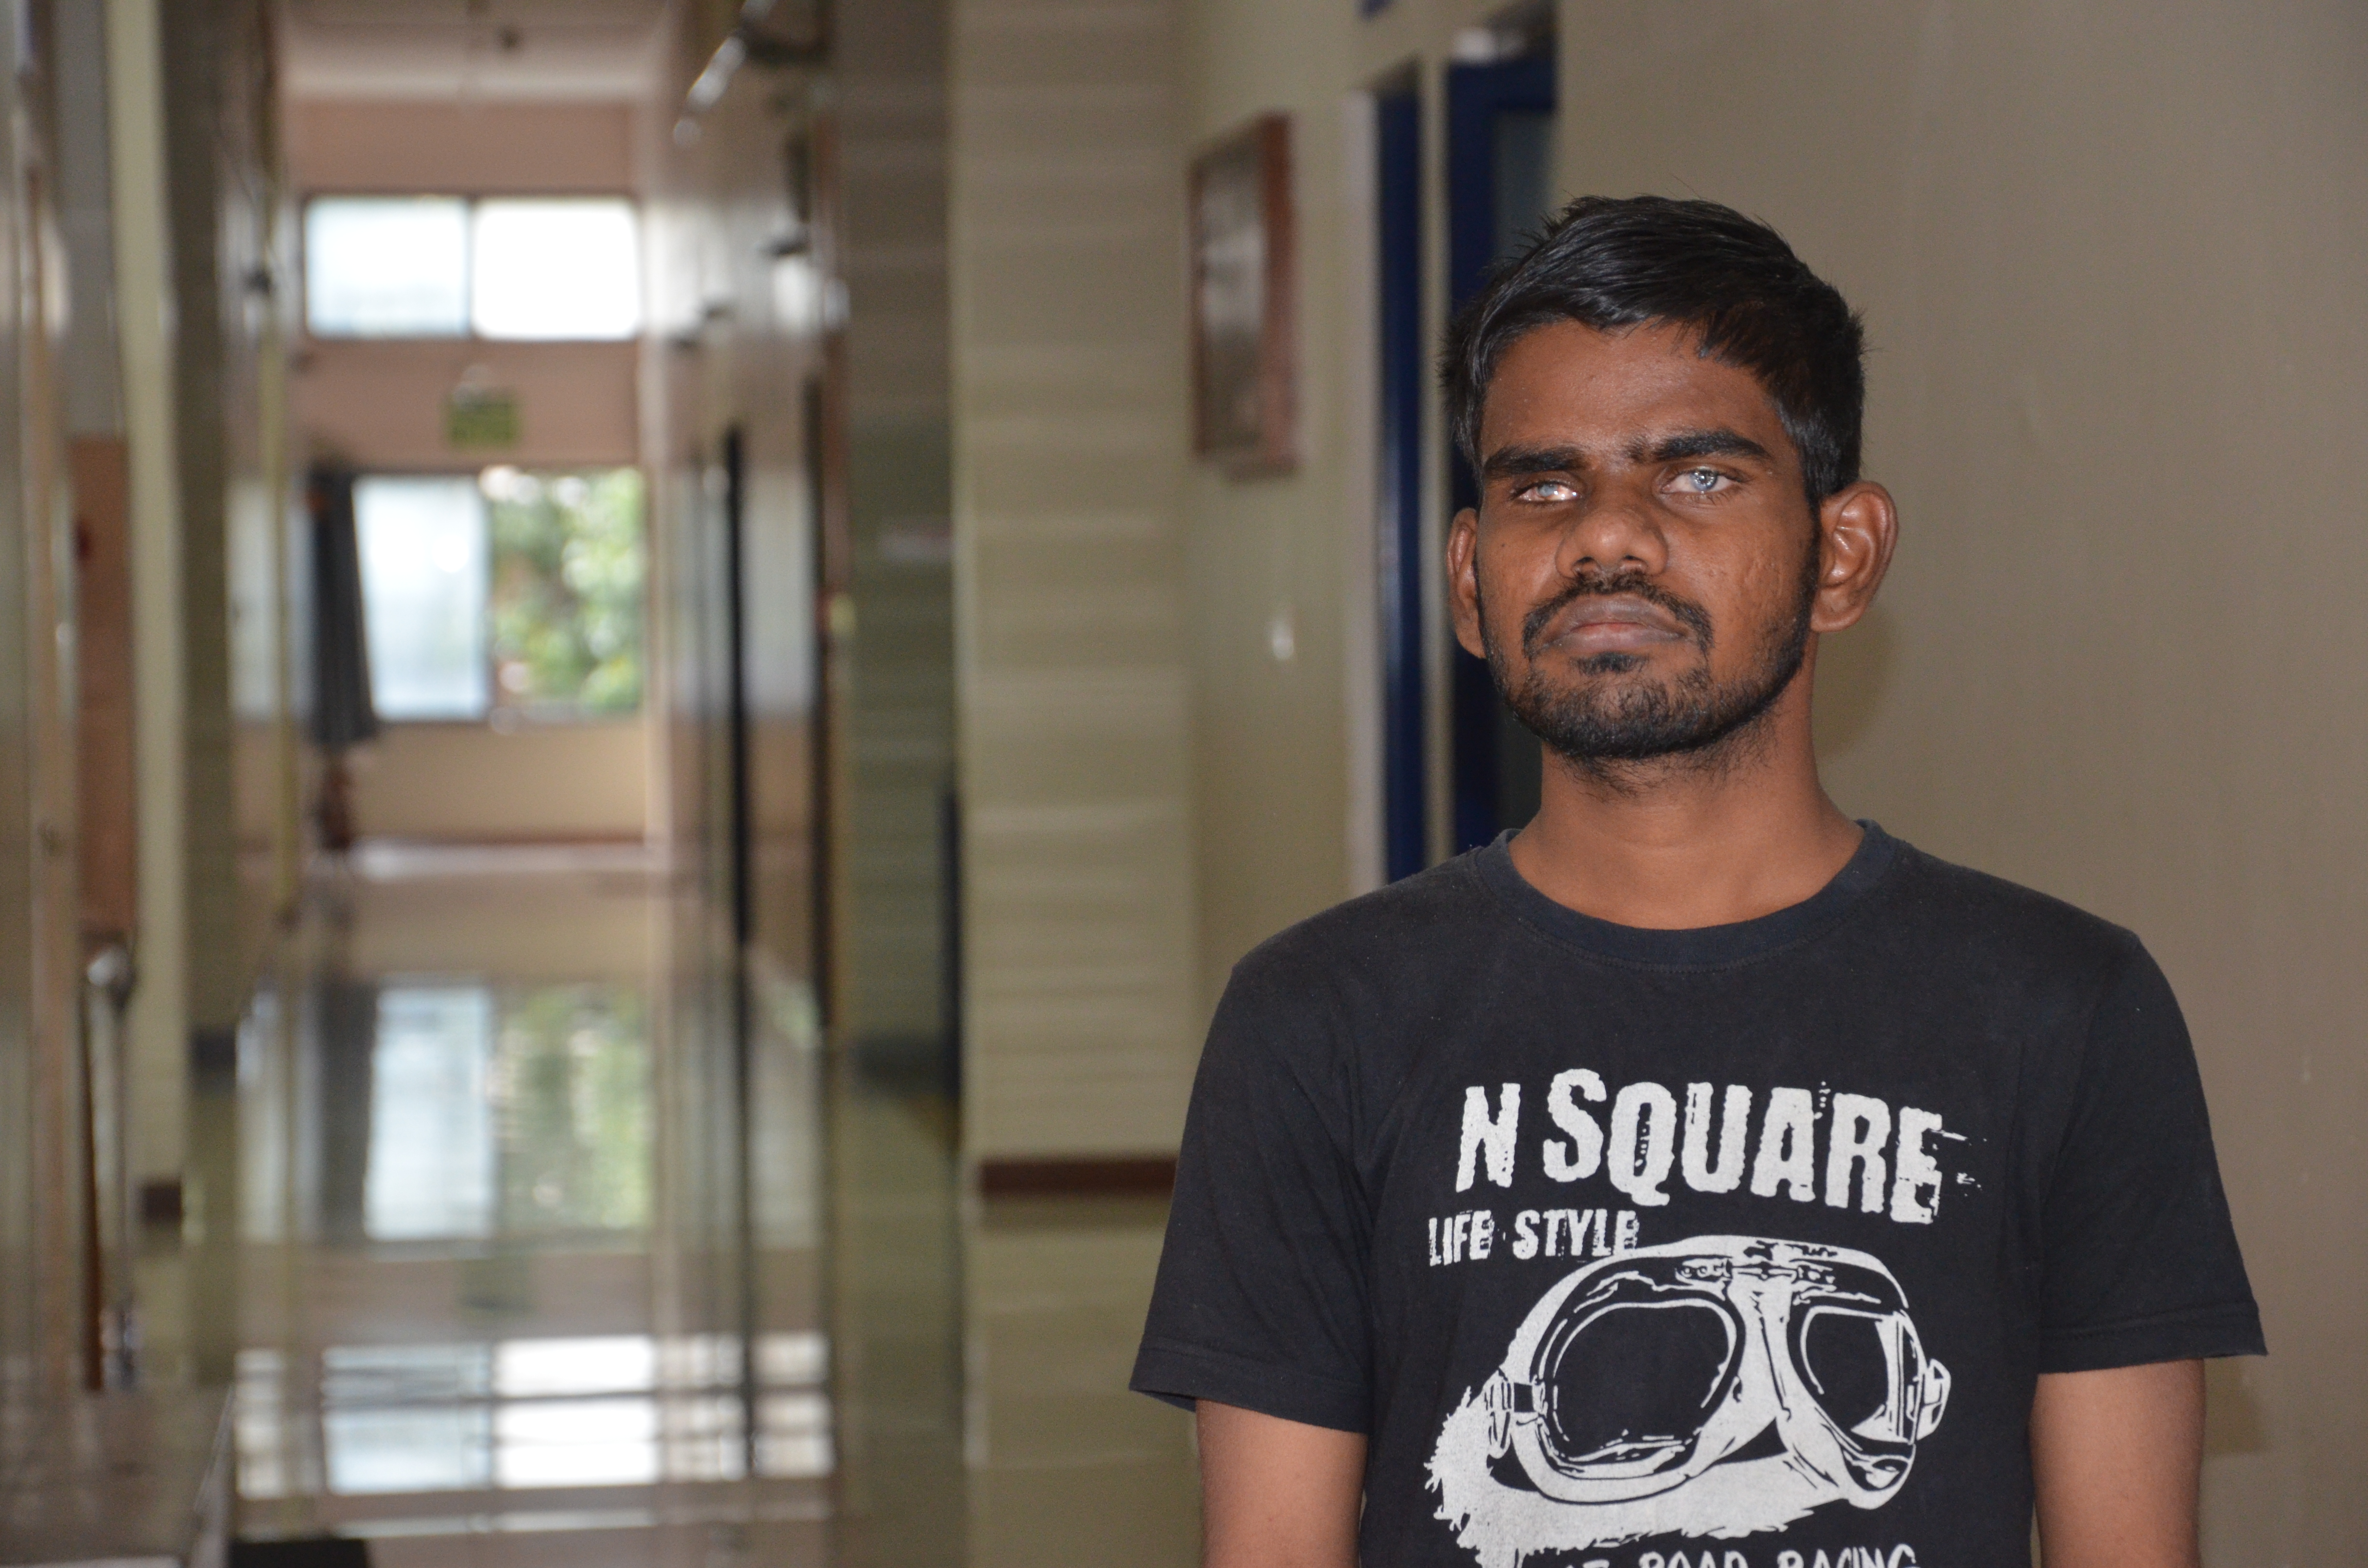 Young Indian man's sight restored through Operation Eyesight Community Eye Health program